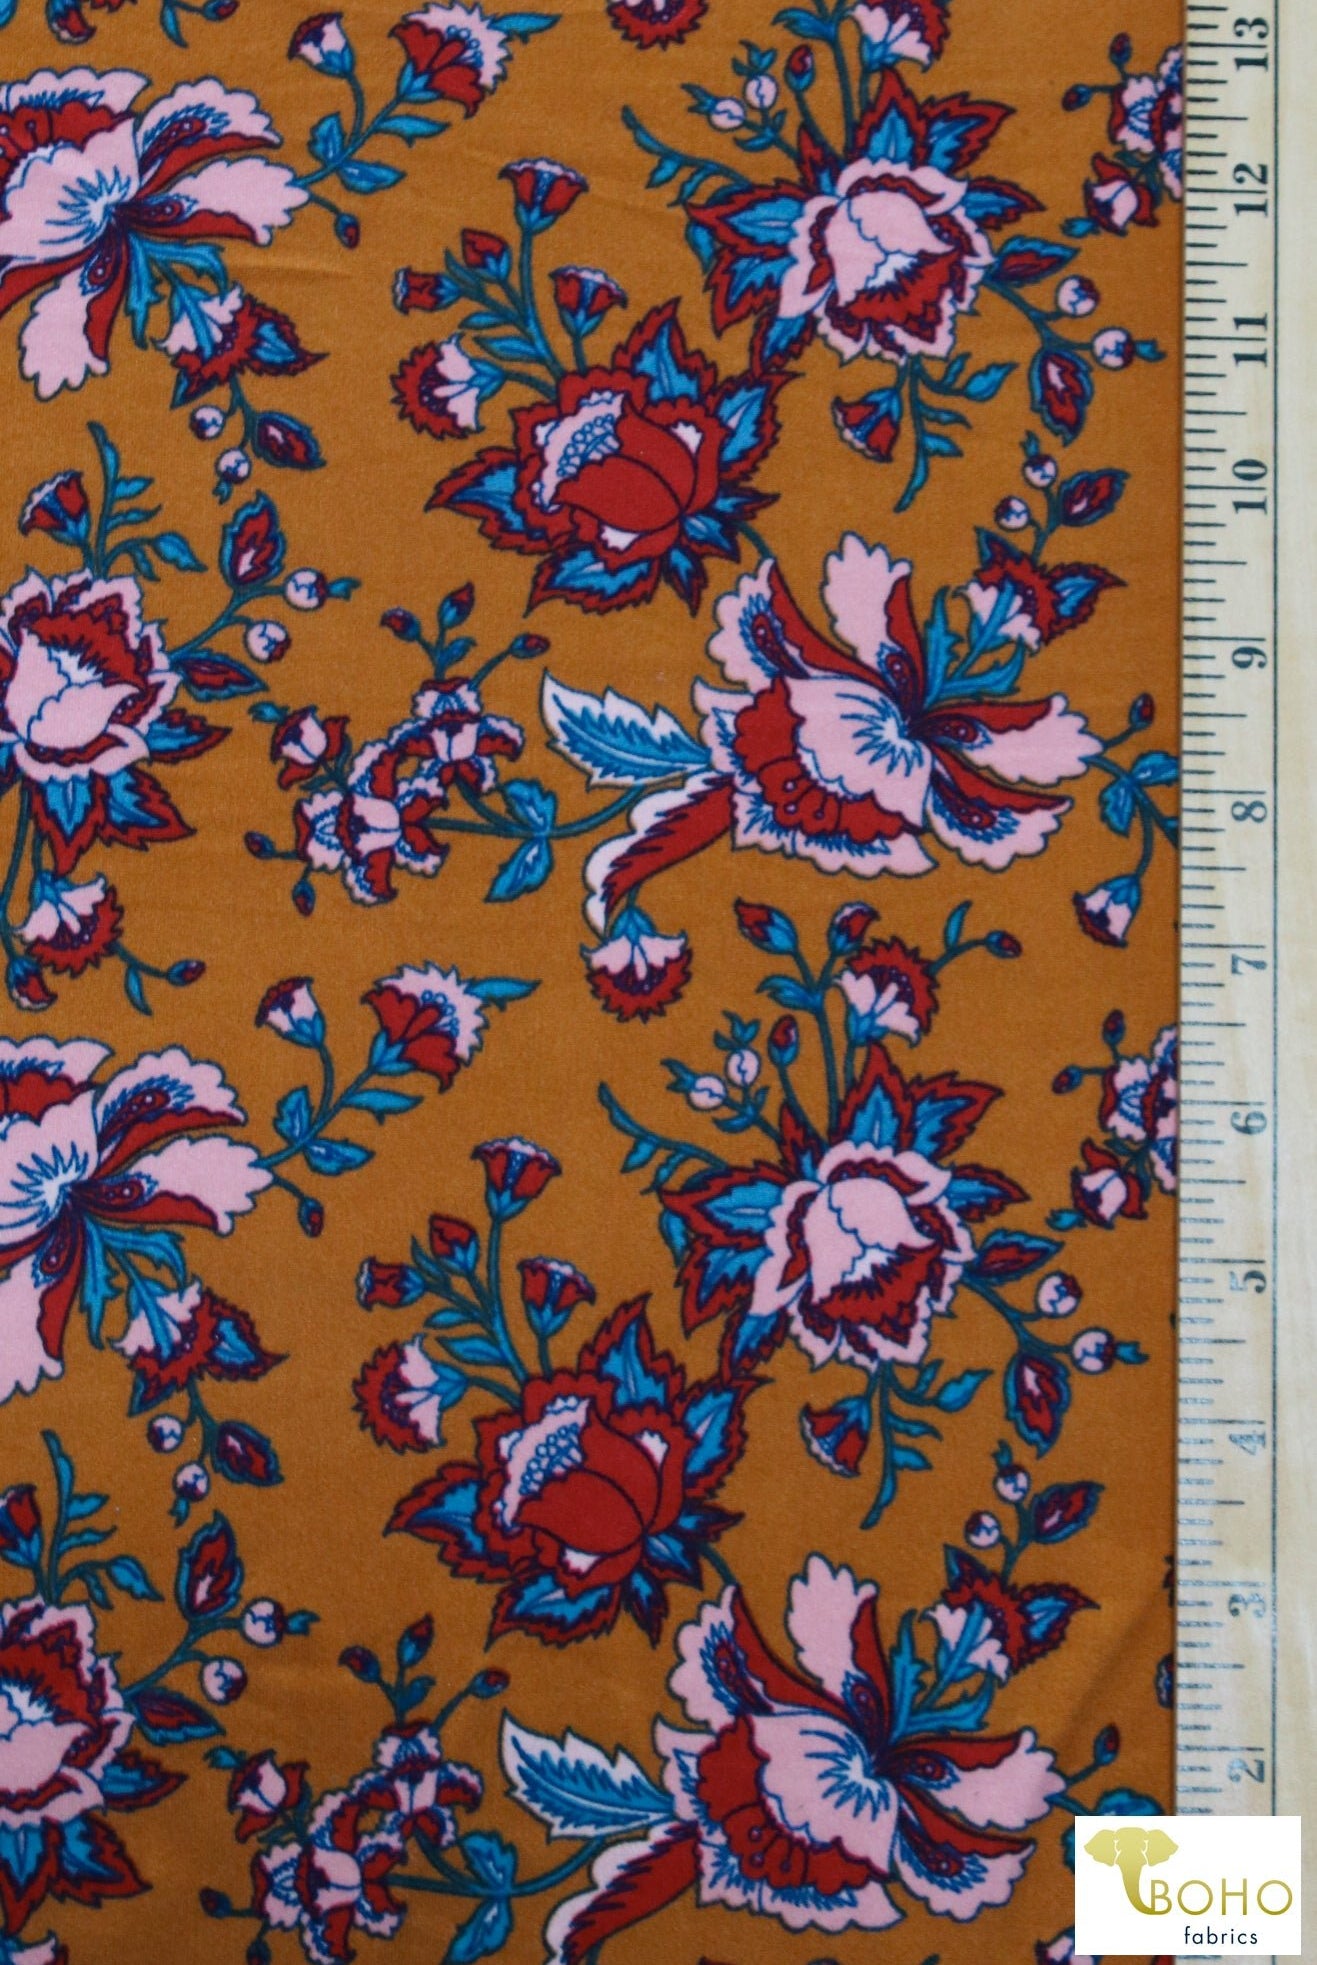 Rococo Florals on Gold, DBP. BPP-309 - Boho Fabrics